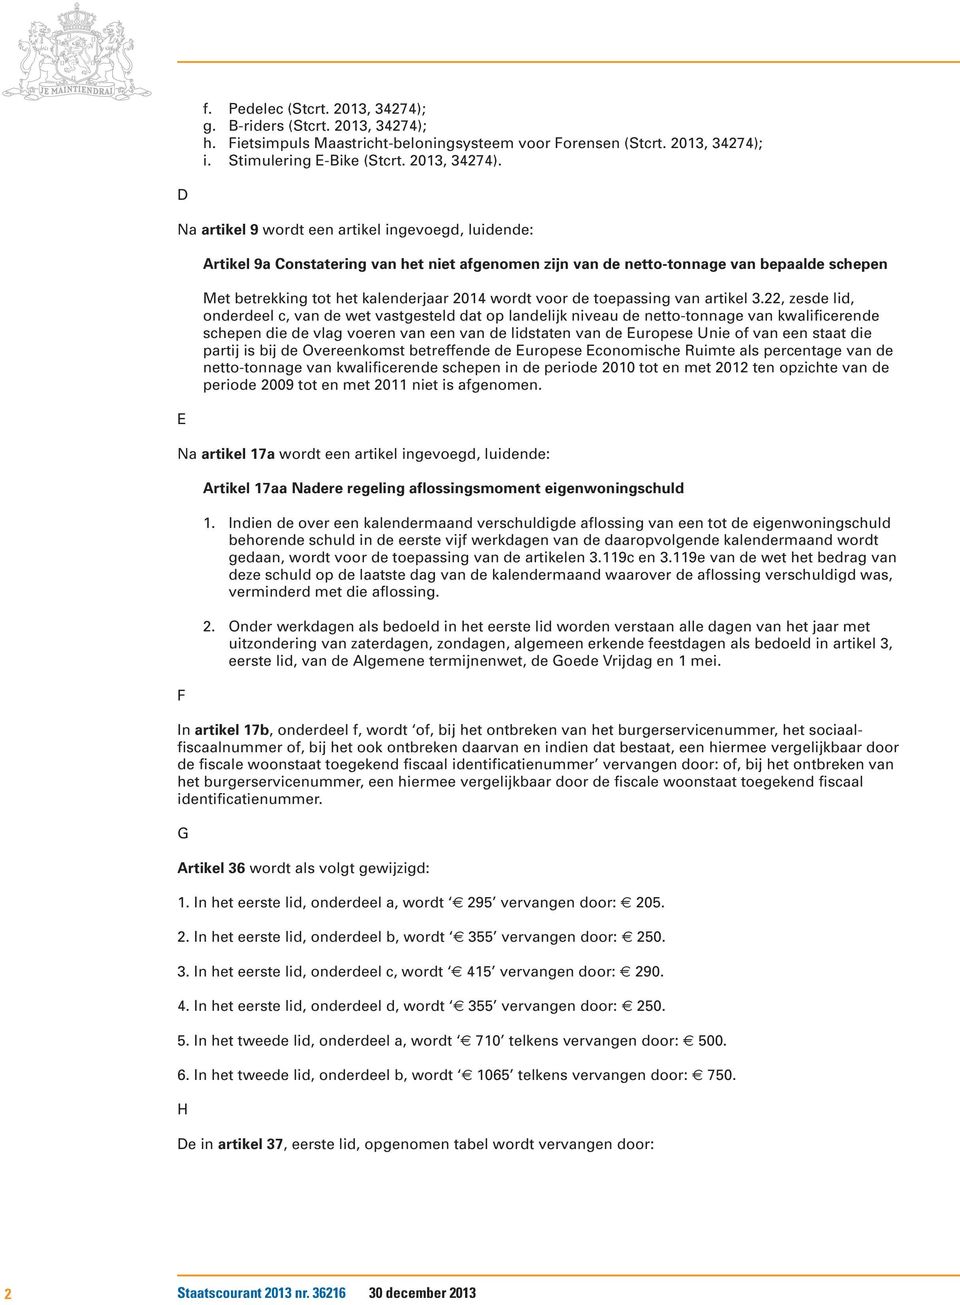 h. Fietsimpuls Maastricht-beloningsysteem voor Forensen (Stcrt. 2013, 34274);